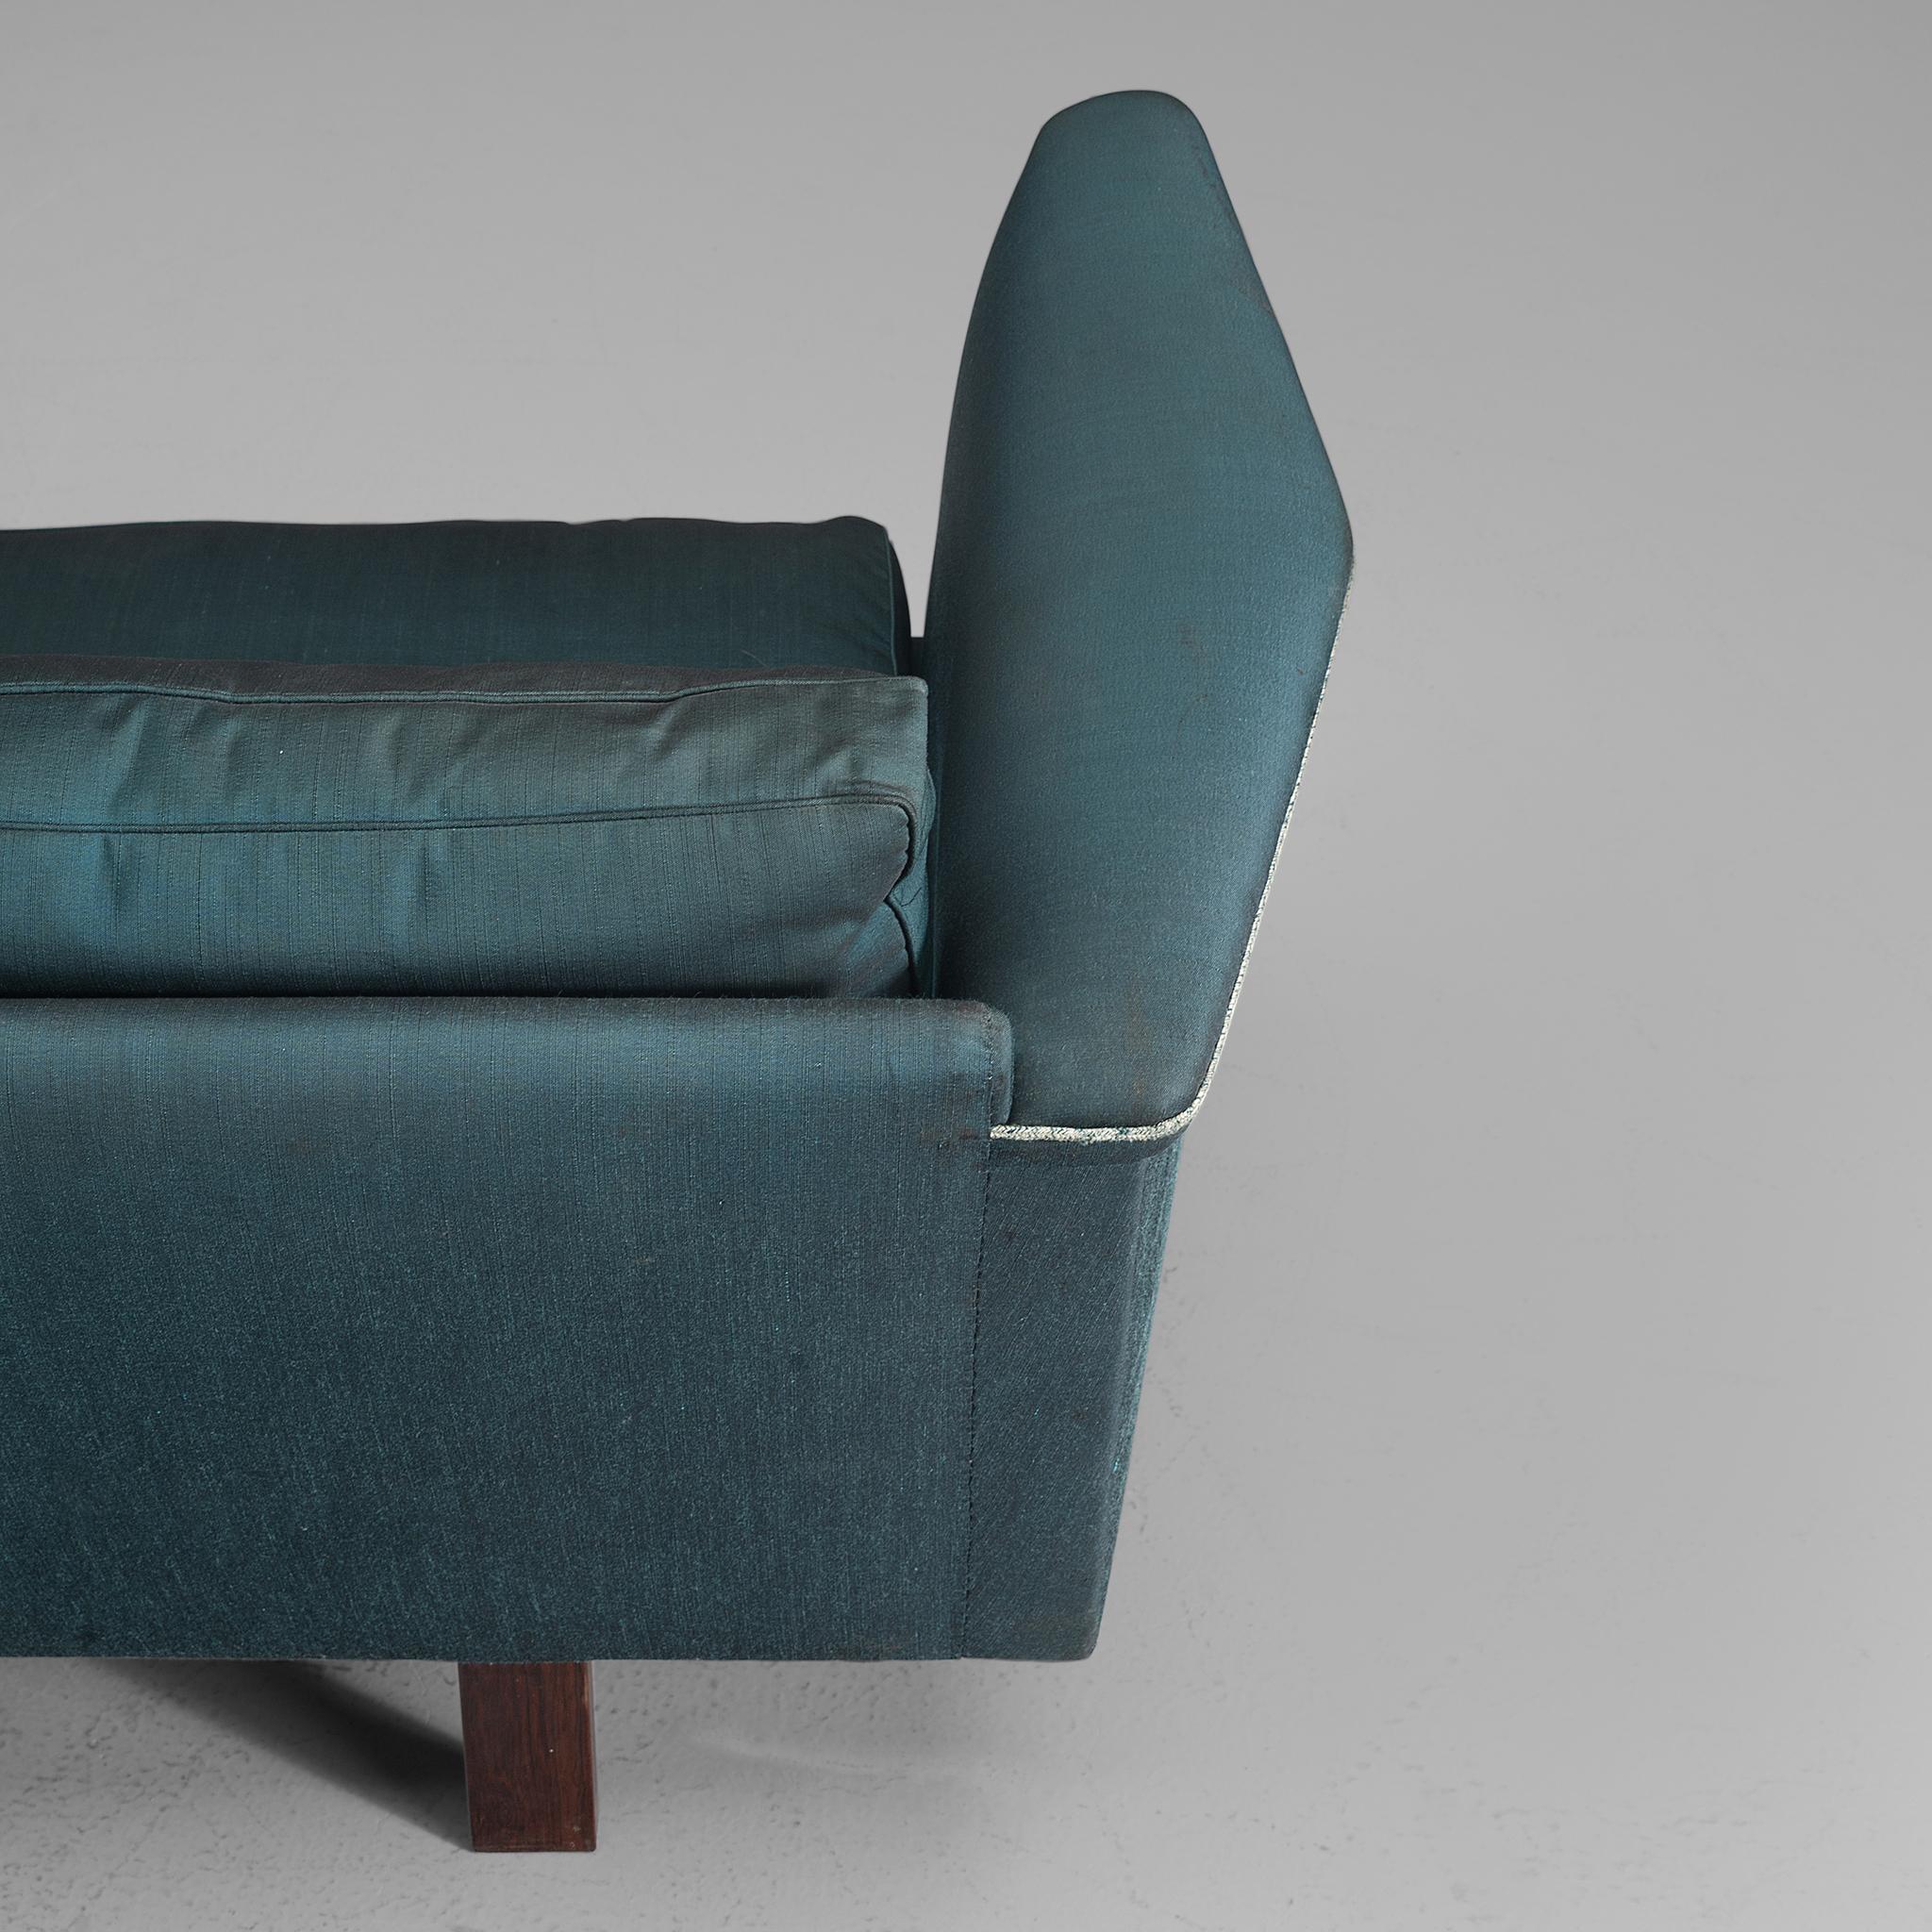 Mid-20th Century Danish Three-Seat Sofa in Turquoise Upholstery 